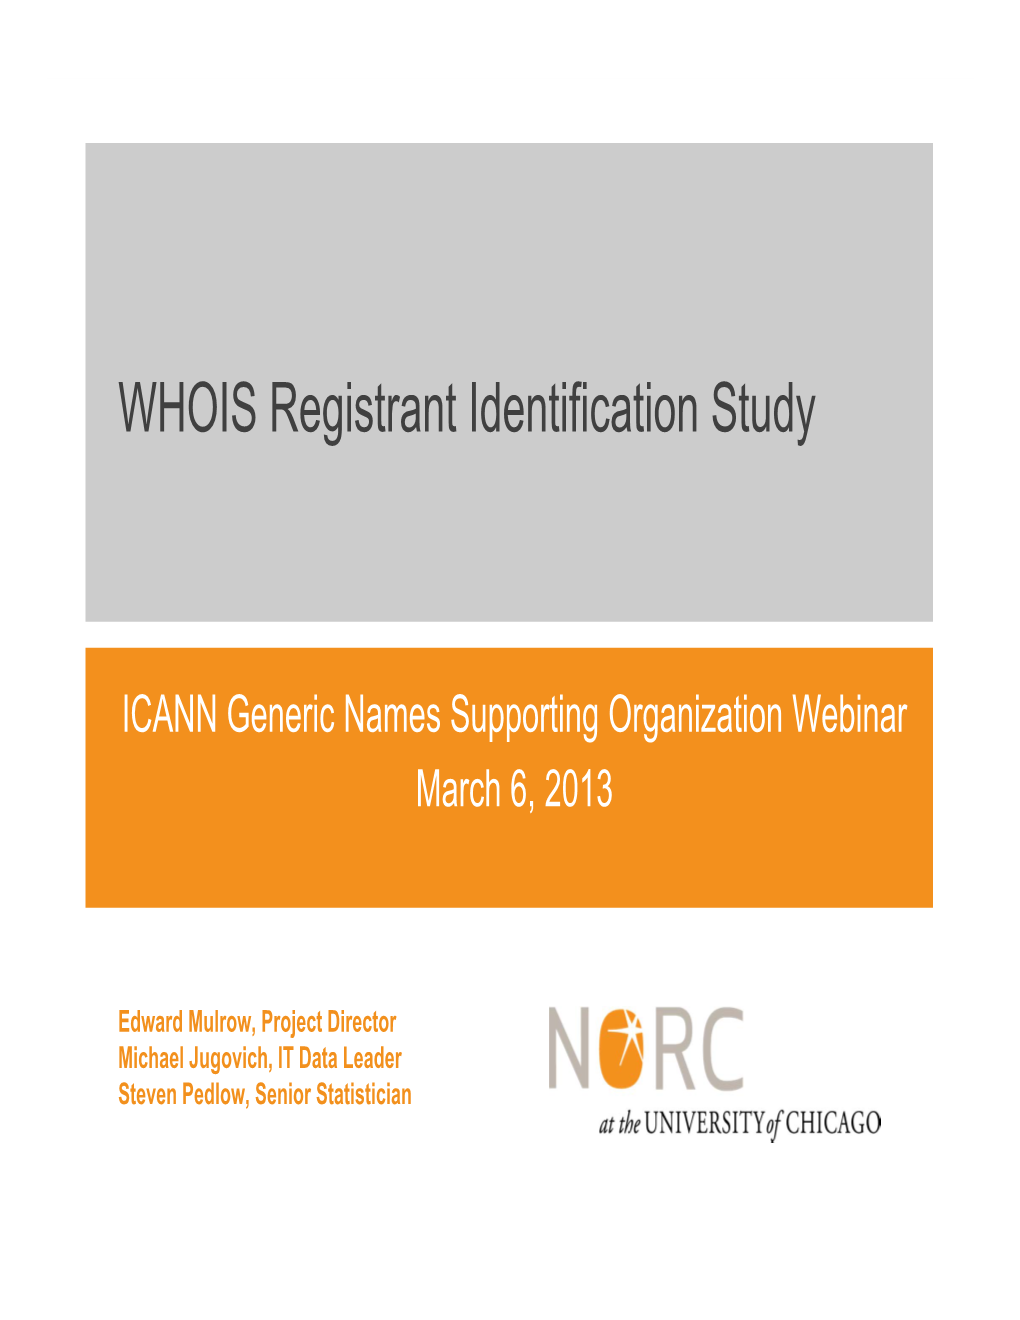 WHOIS Registrant Identification Study